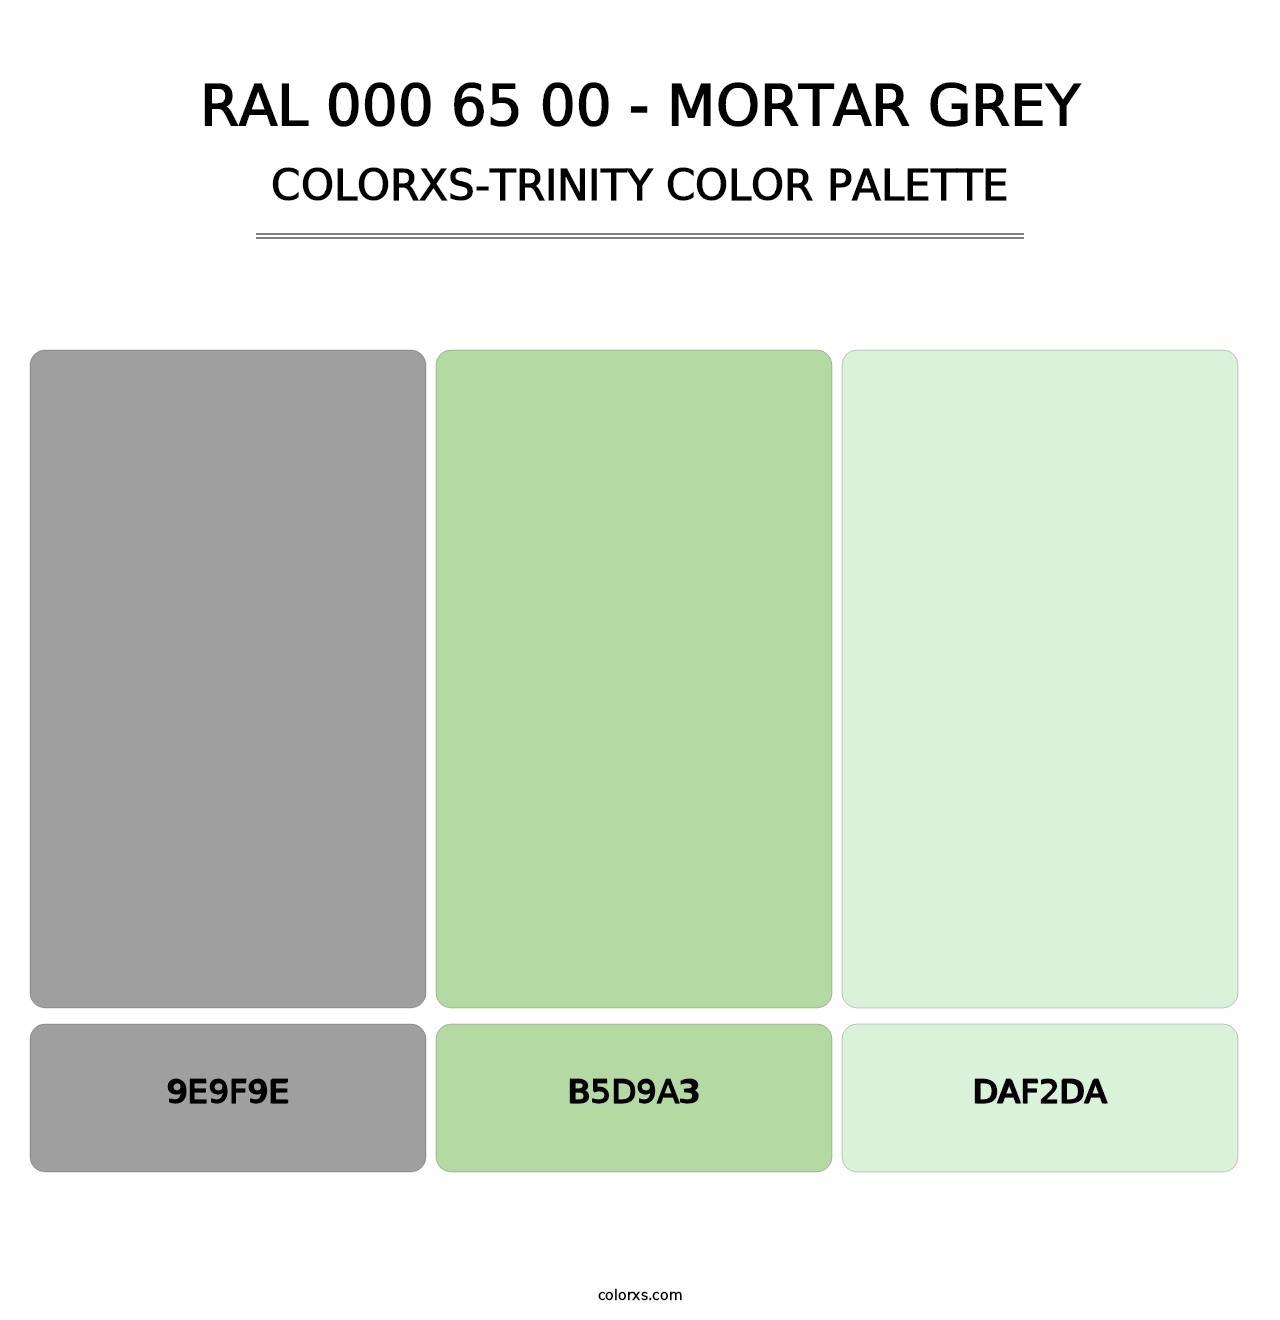 RAL 000 65 00 - Mortar Grey - Colorxs Trinity Palette